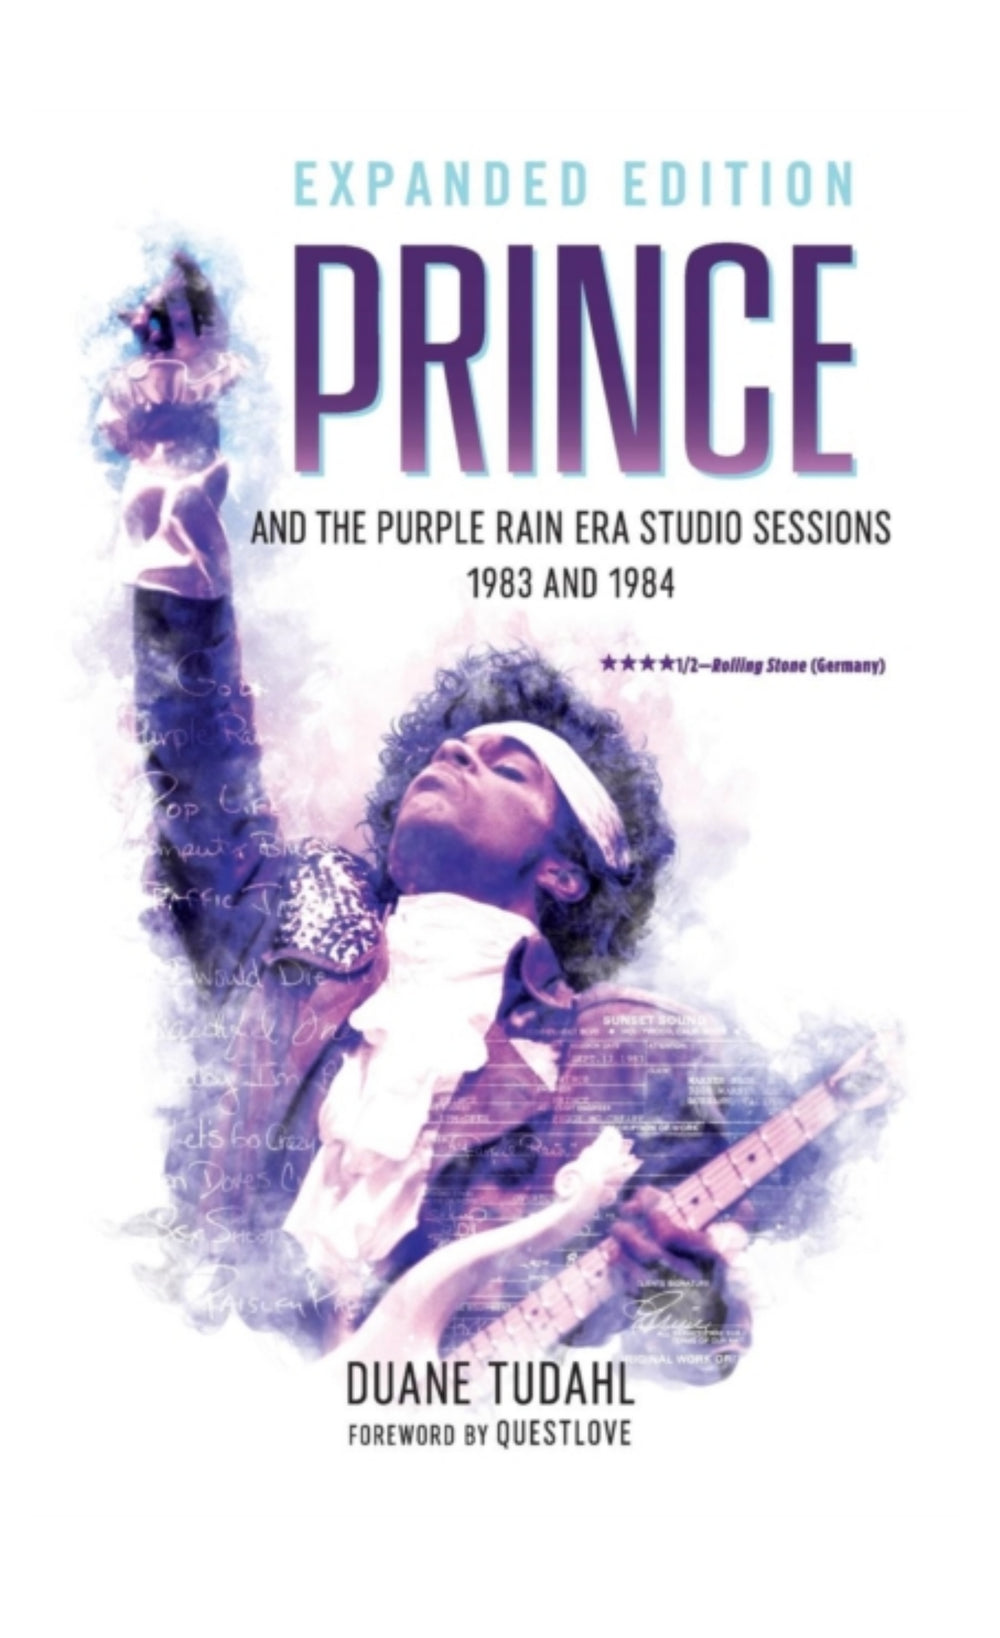 Prince – Prince and the Purple Rain Era Studio Sessions : 1983 and 1984 Book: NEW